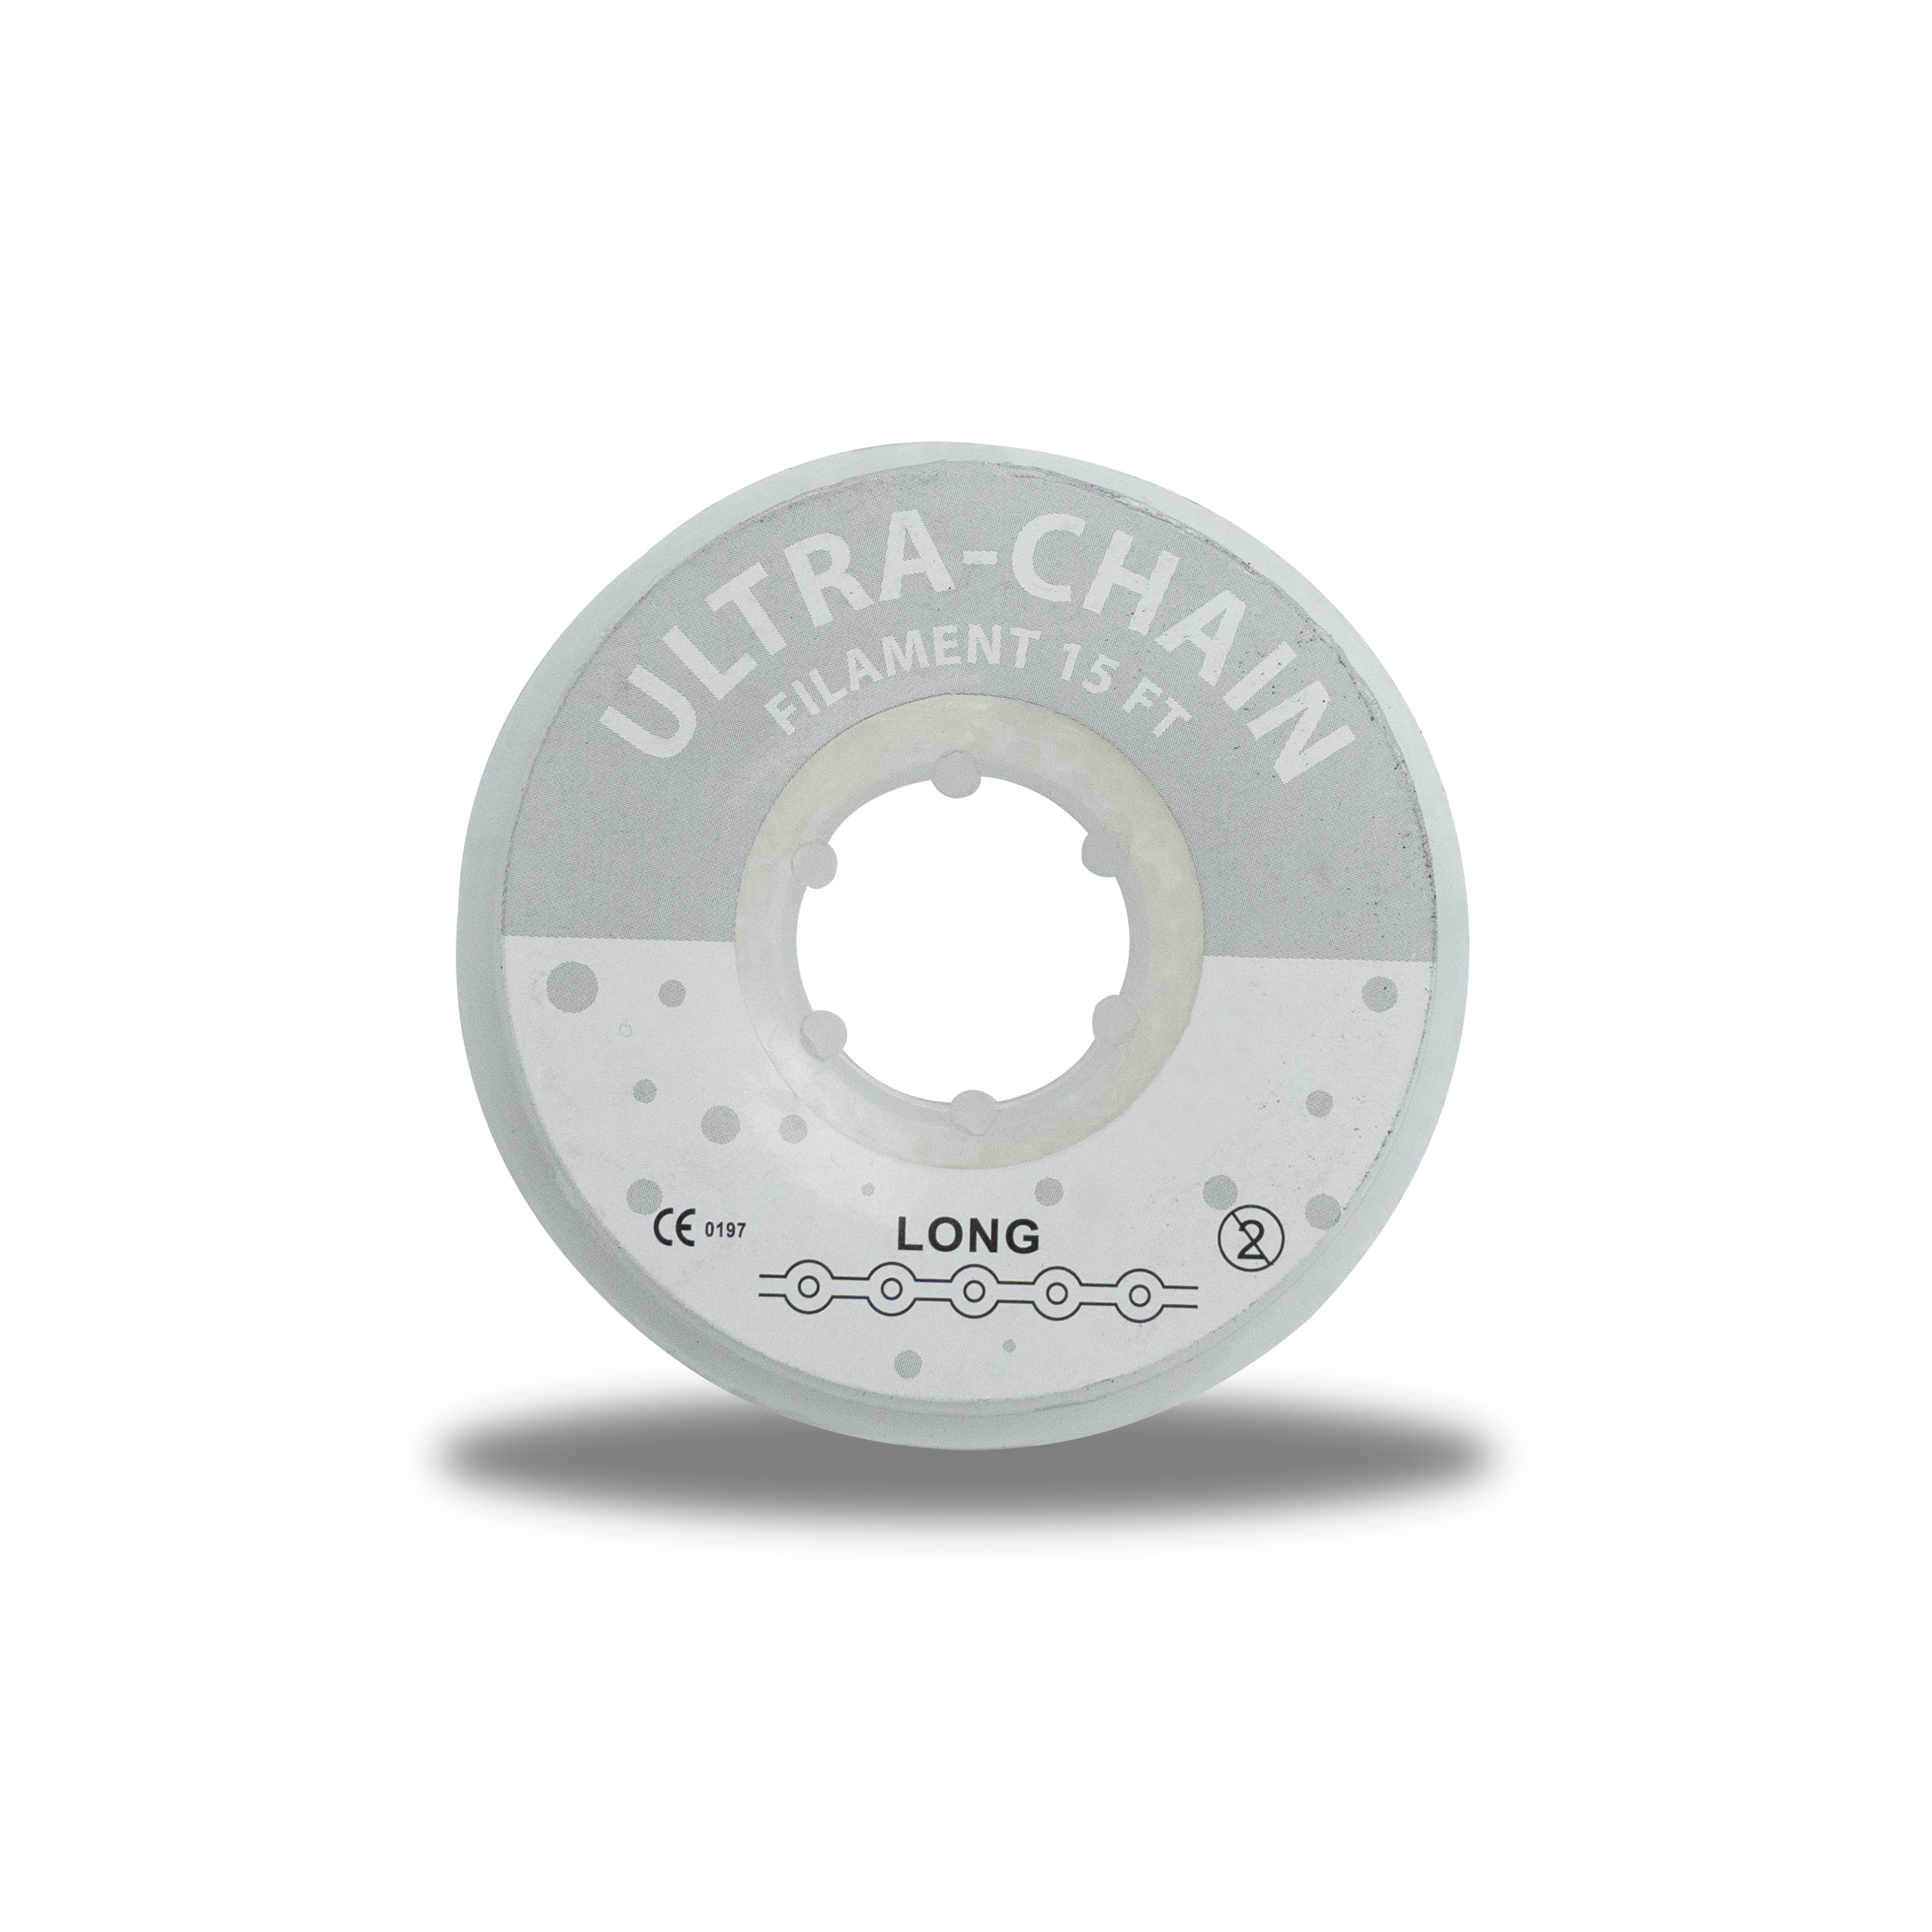 Ultra Chain Filament 15ft